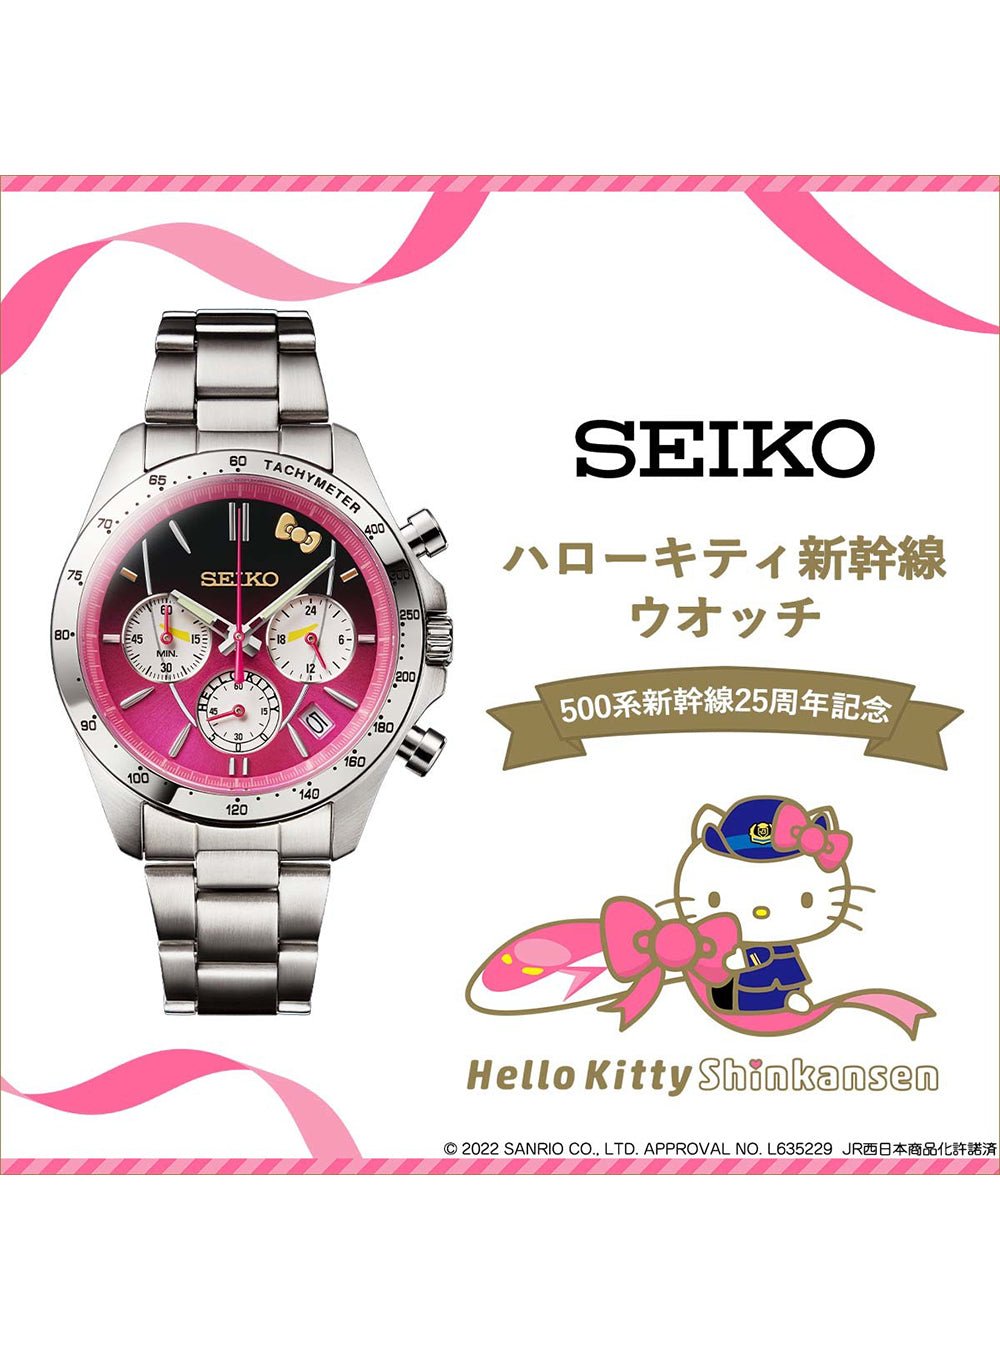 SEIKO HELLO KITTY SHINKANSEN MADE IN JAPAN LIMITED EDITIONWRISTWATCHjapan-select